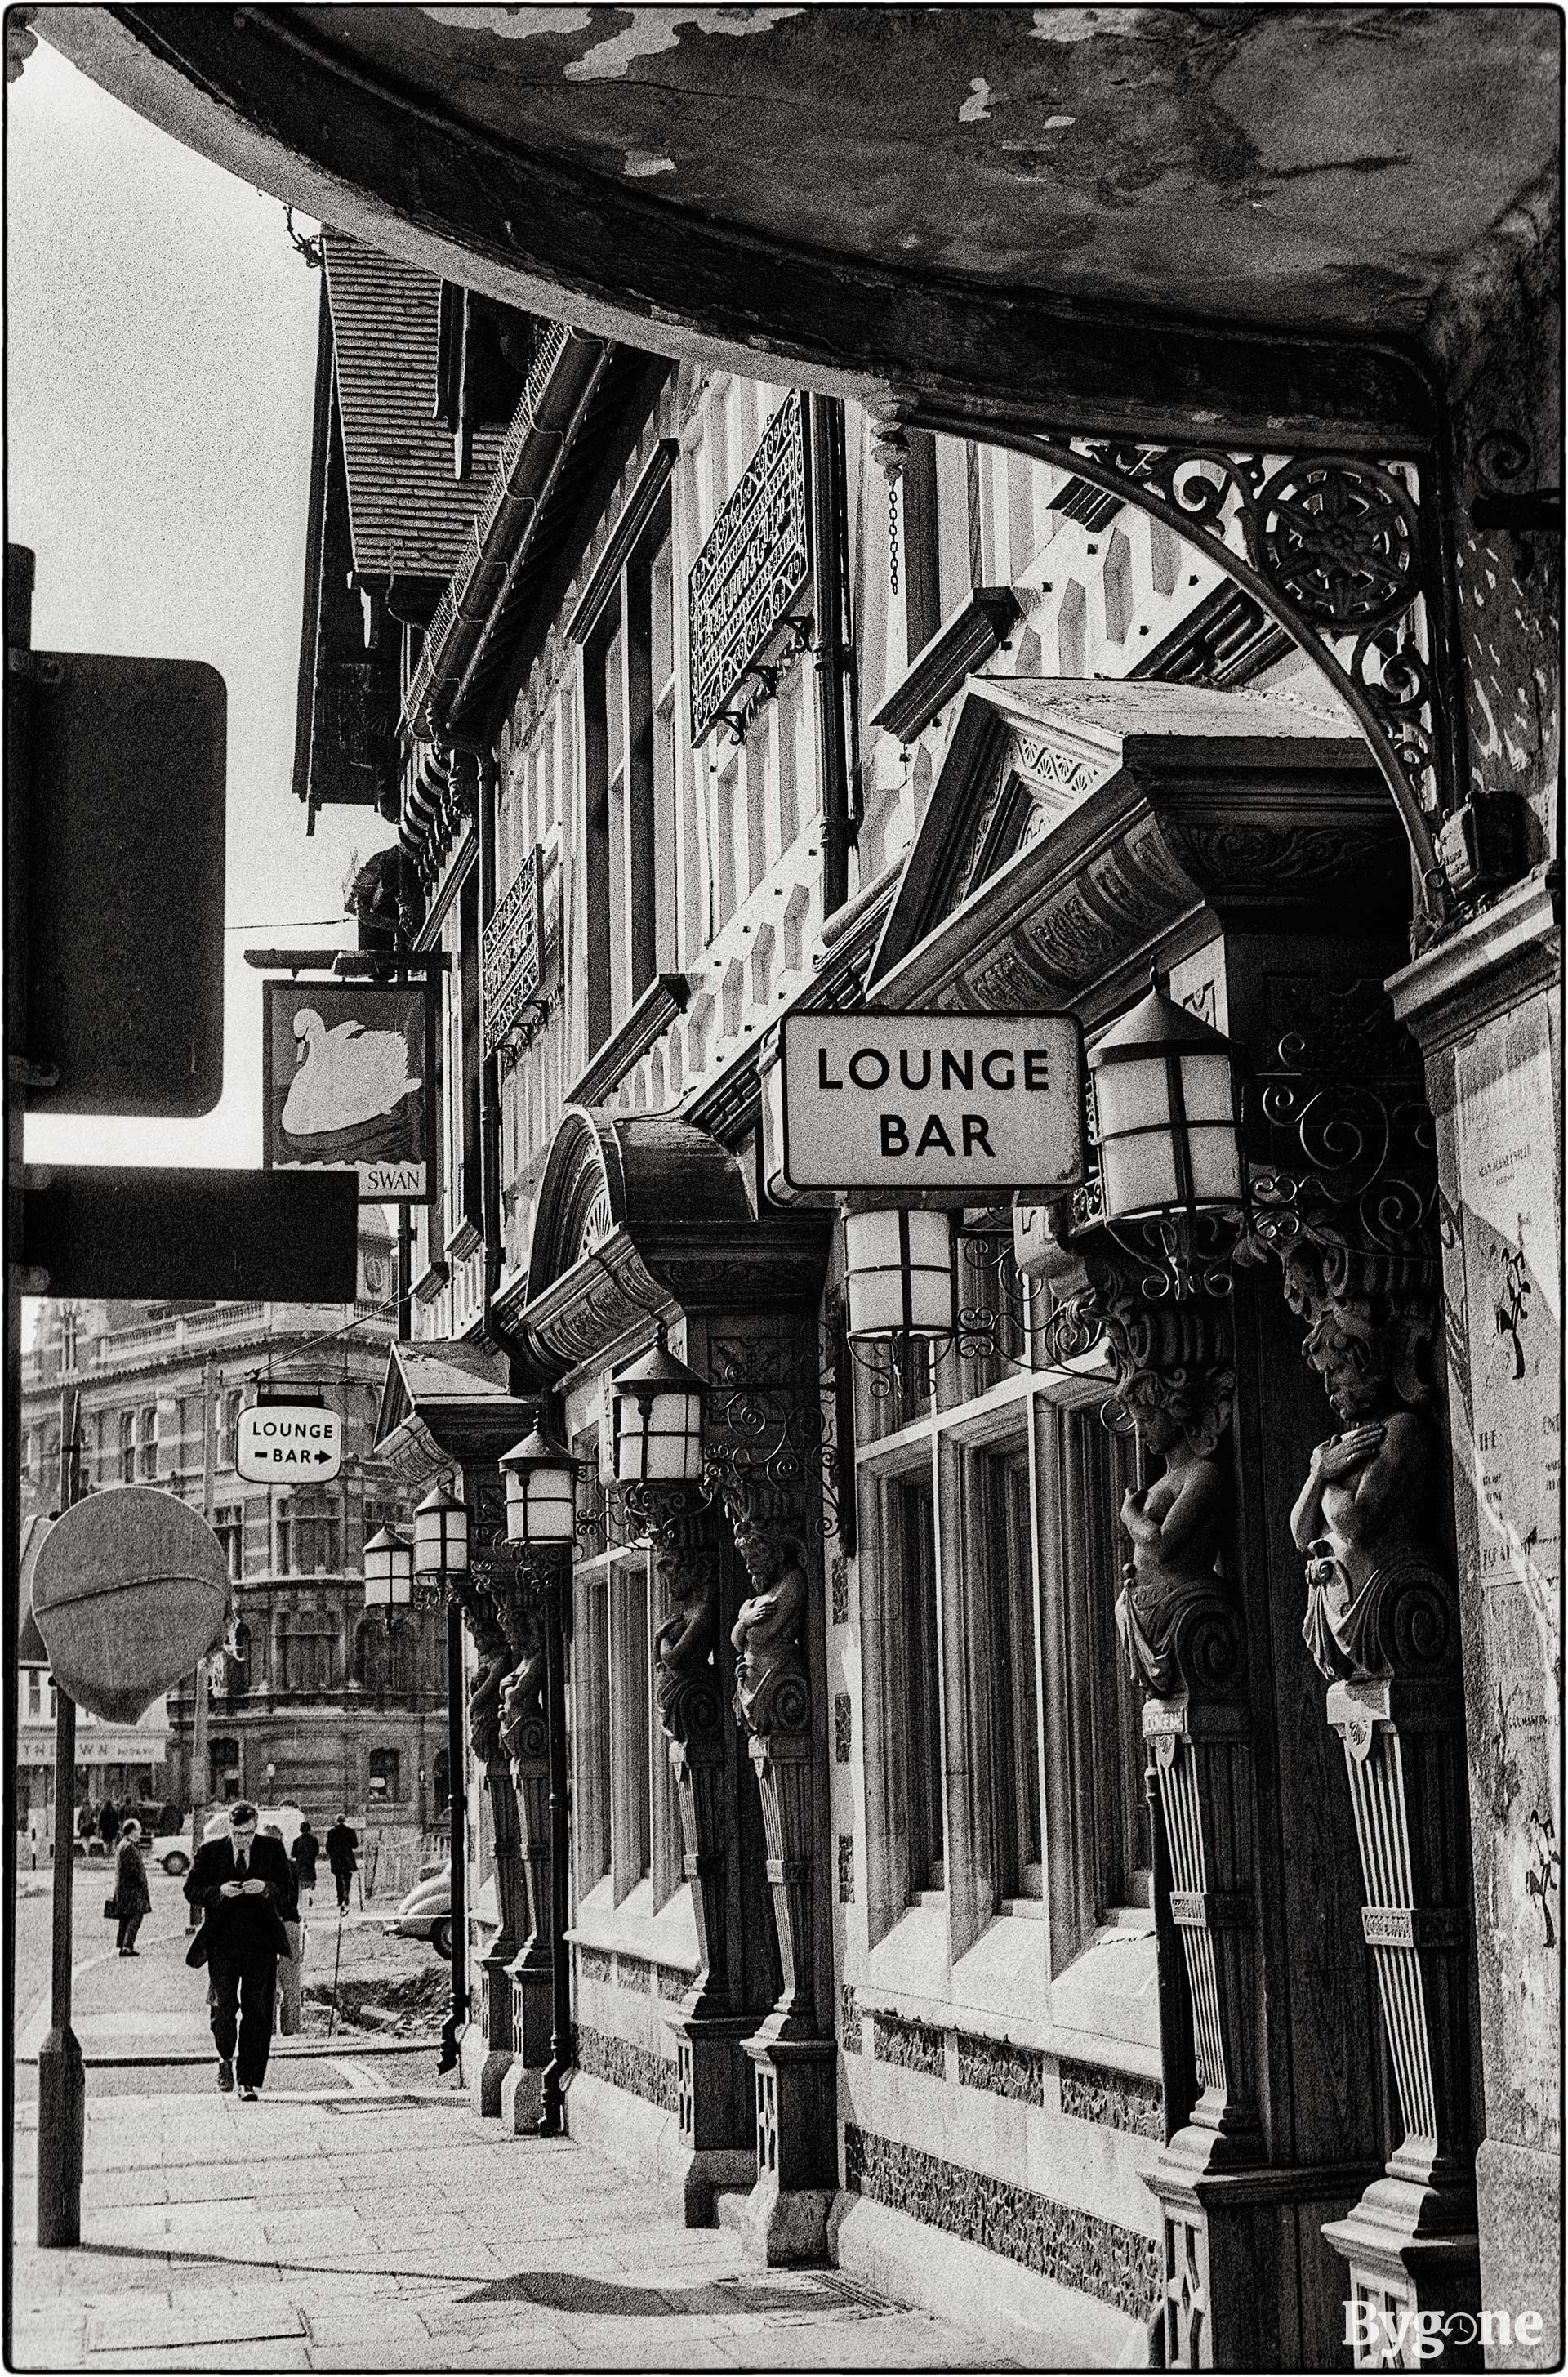 The White Swan Pub, Guildhall Walk